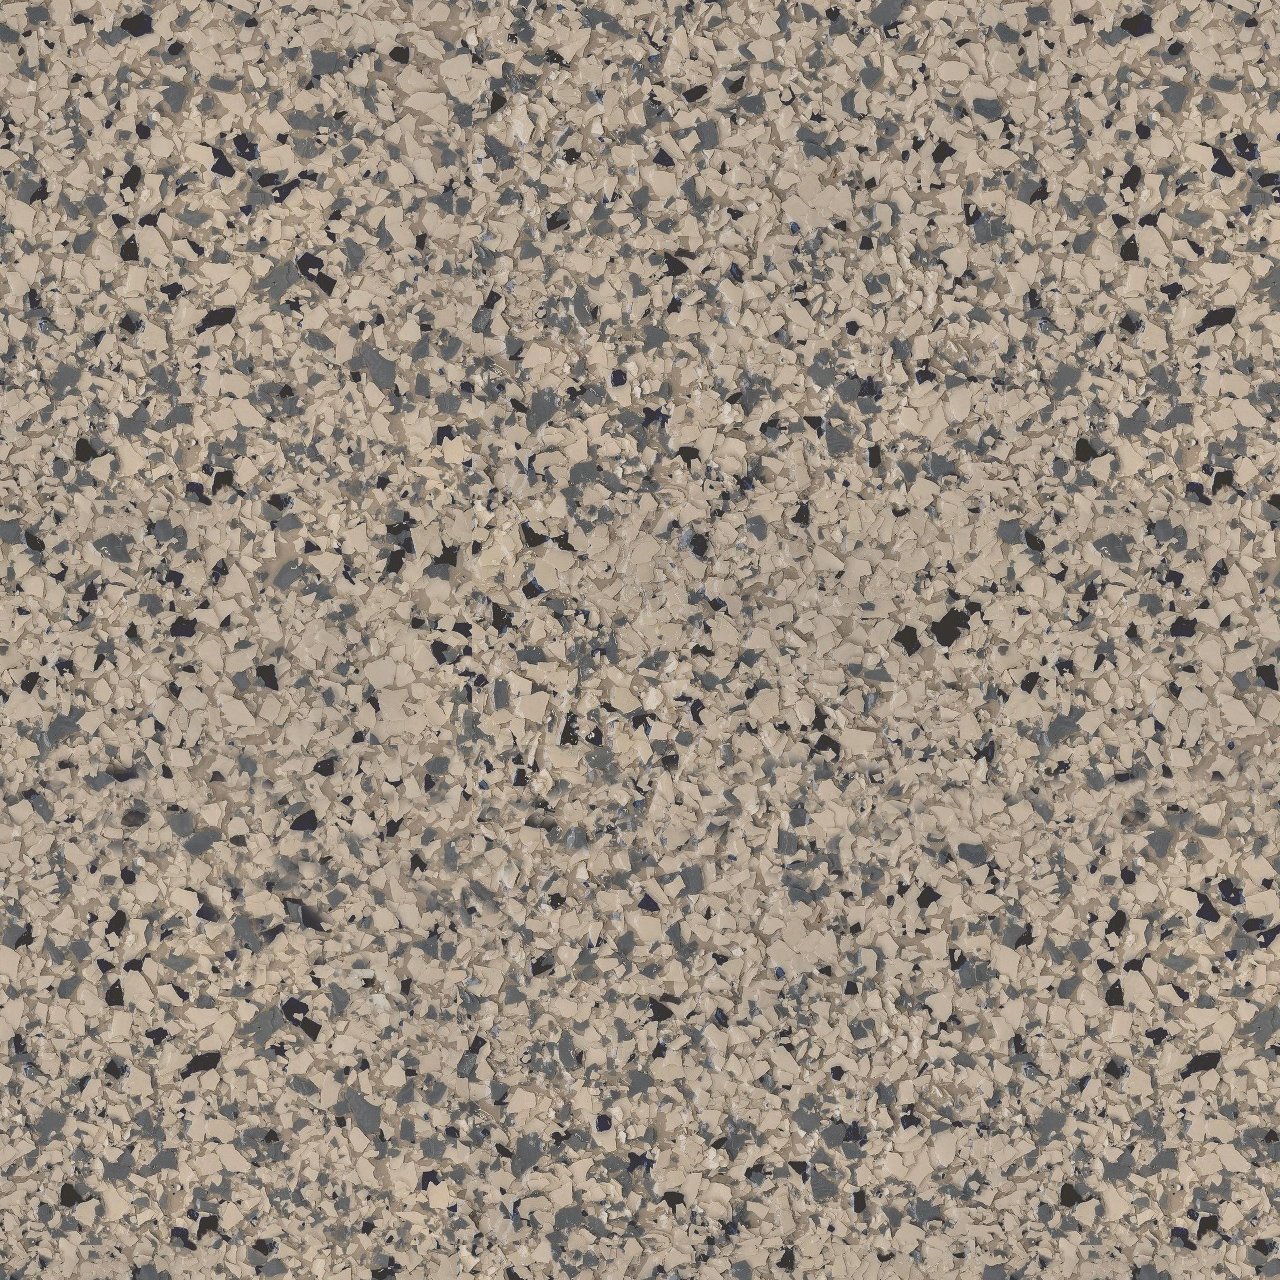 pebble-beach-floortex-coating